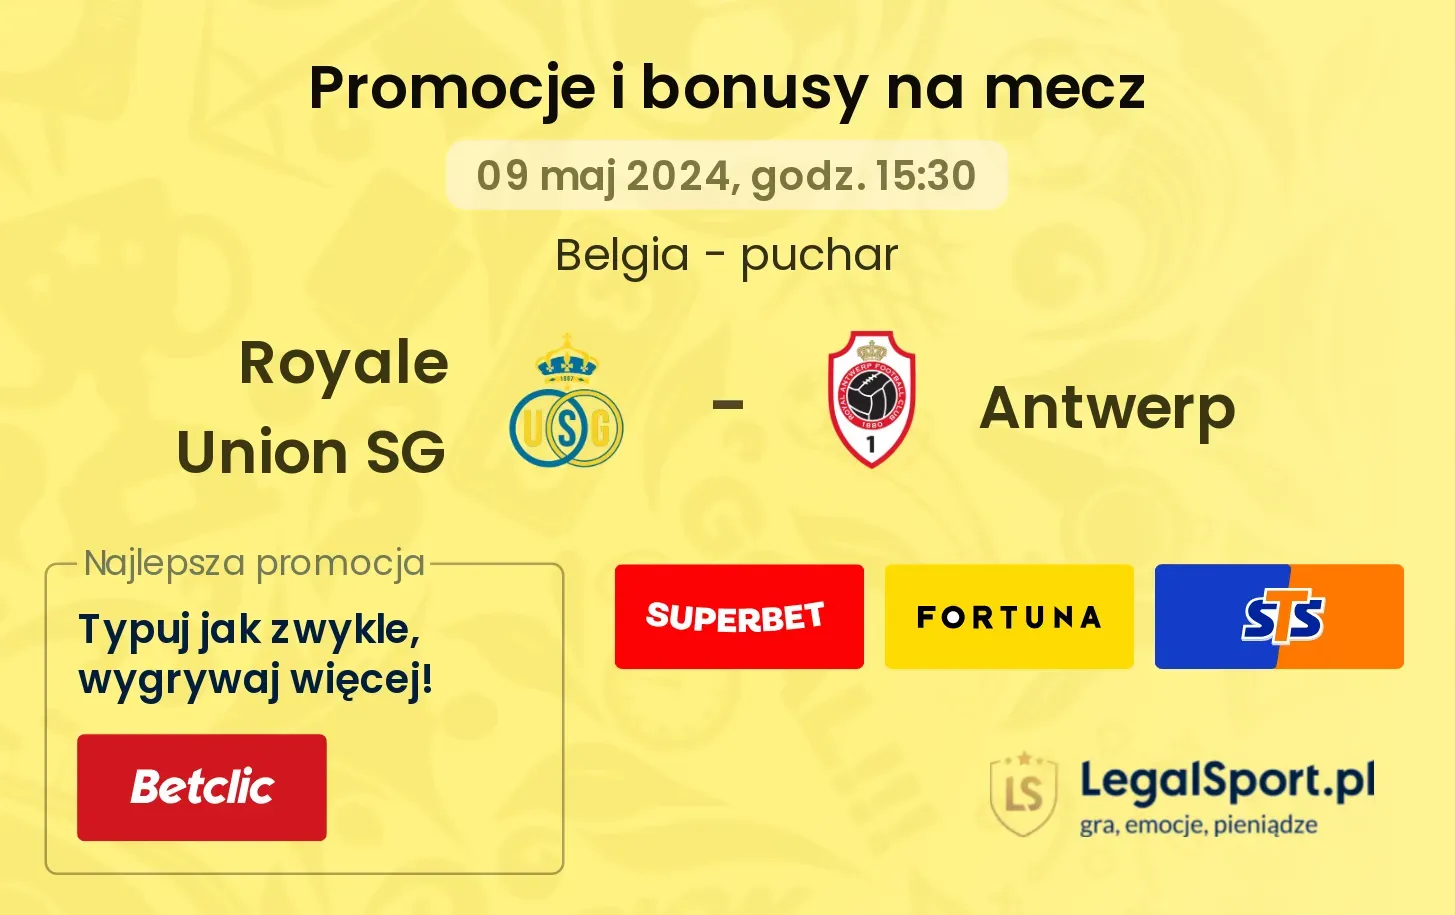 Royale Union SG - Antwerp promocje bonusy na mecz